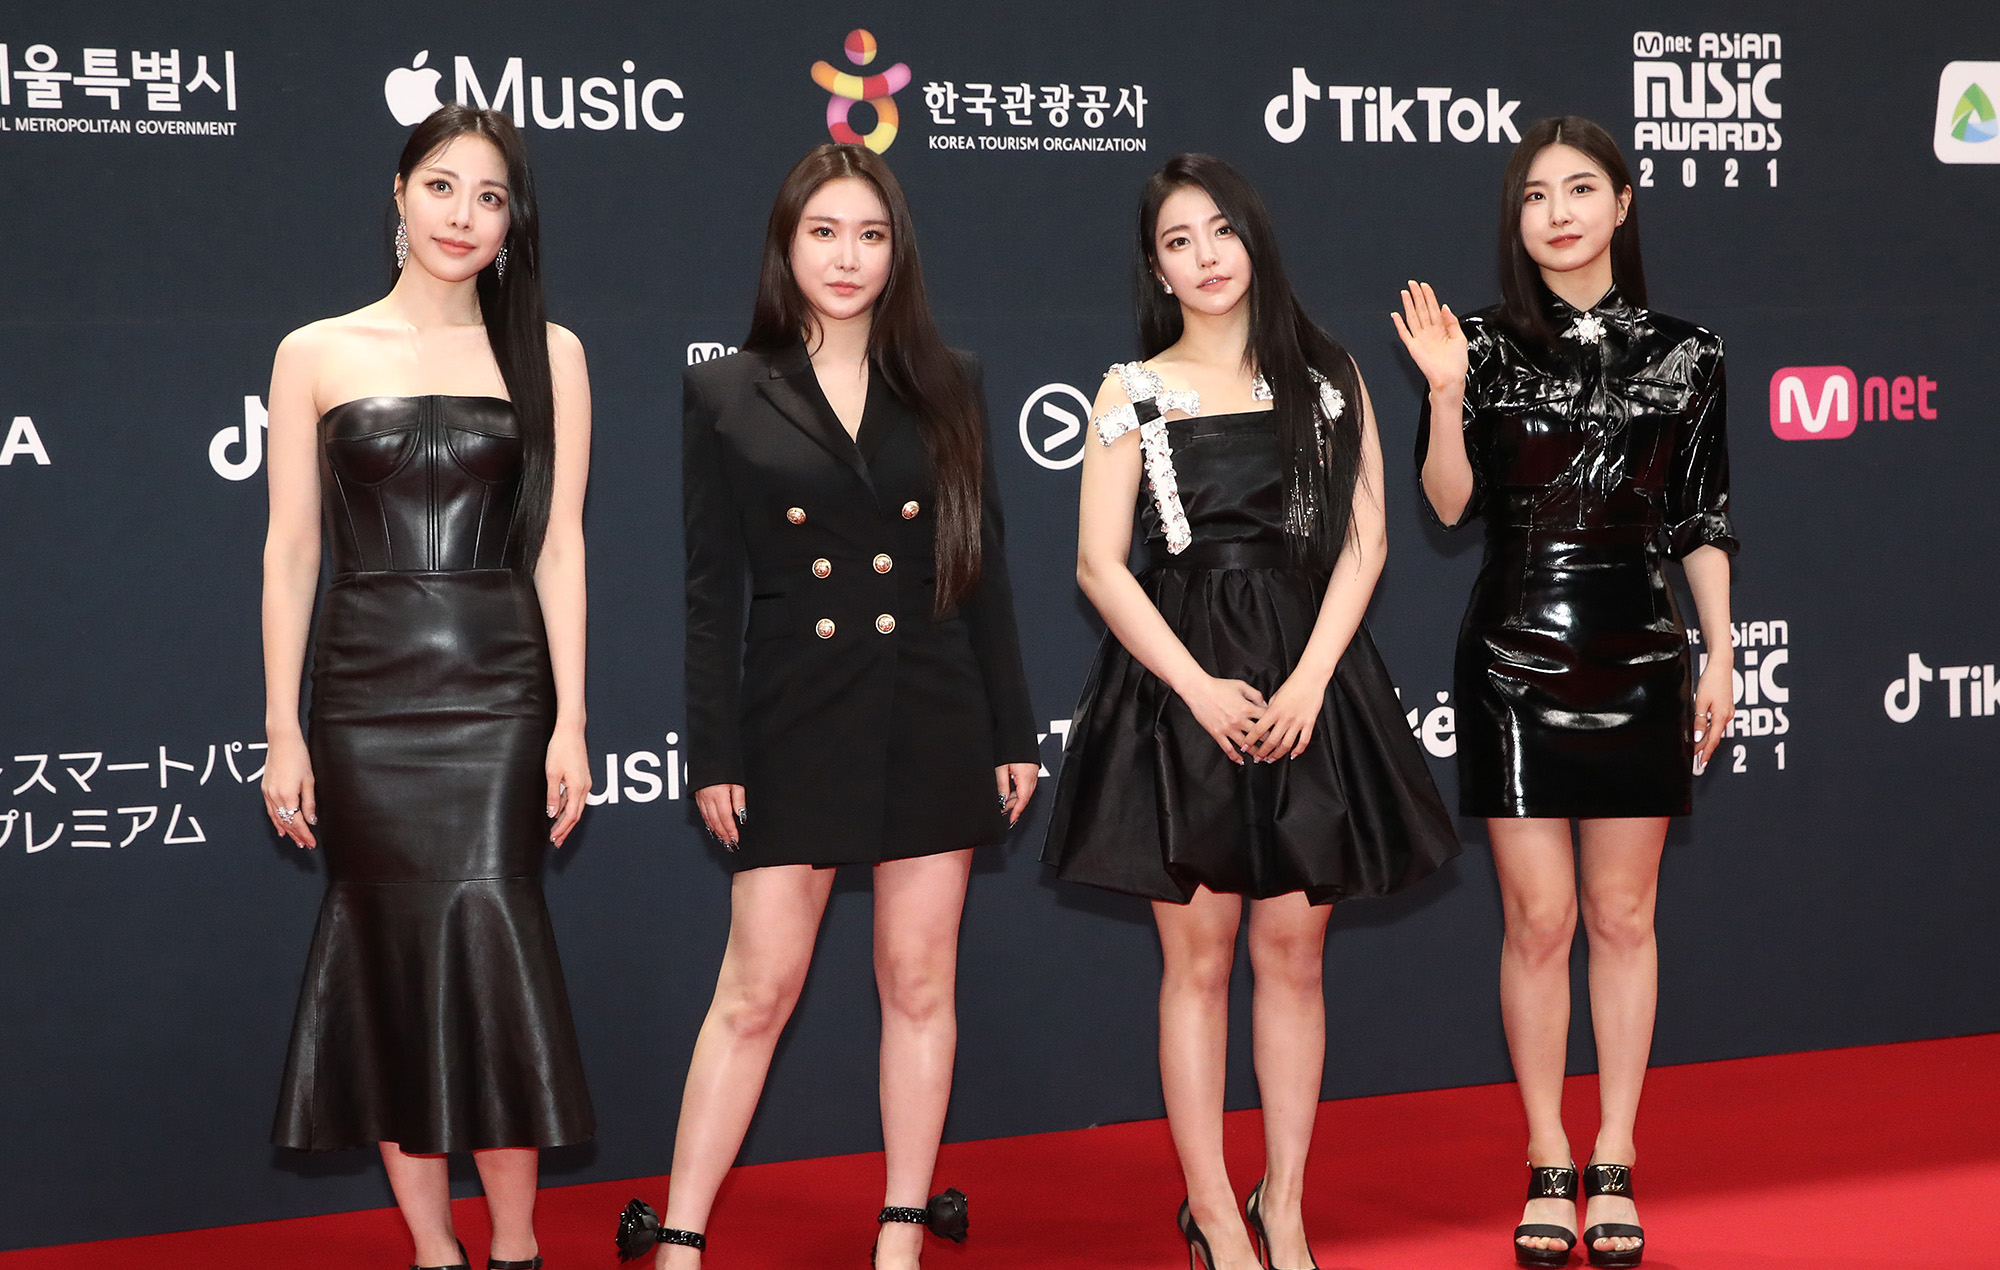 bbgirls brave girls warner music korea company youjoung